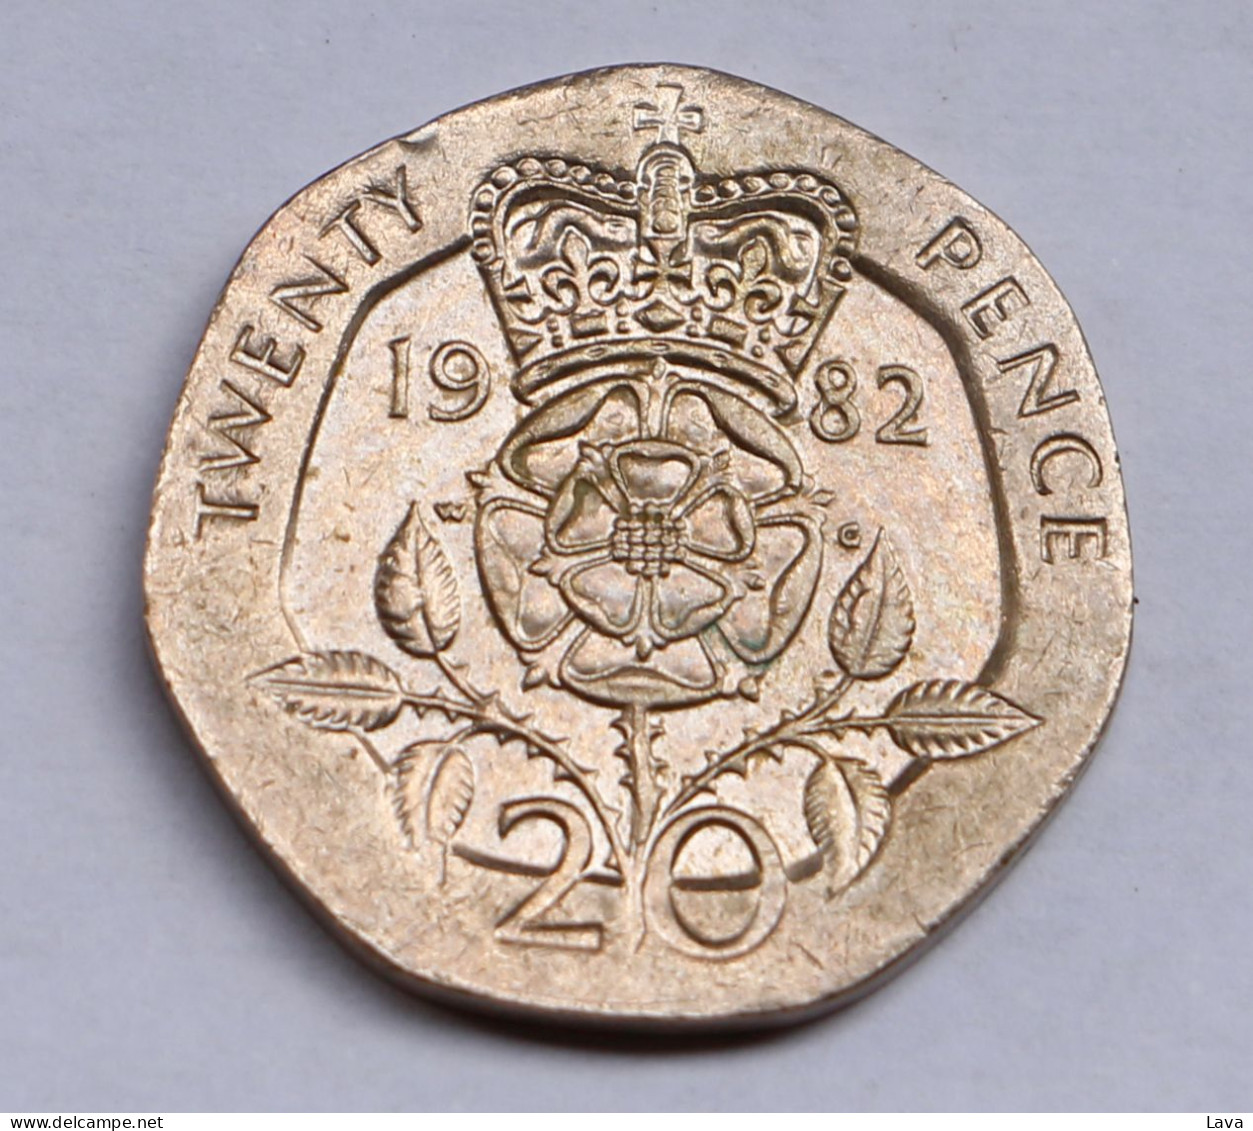 1982 20 Pence Elizabeth II United Kingdom Rare Coin - 20 Pence